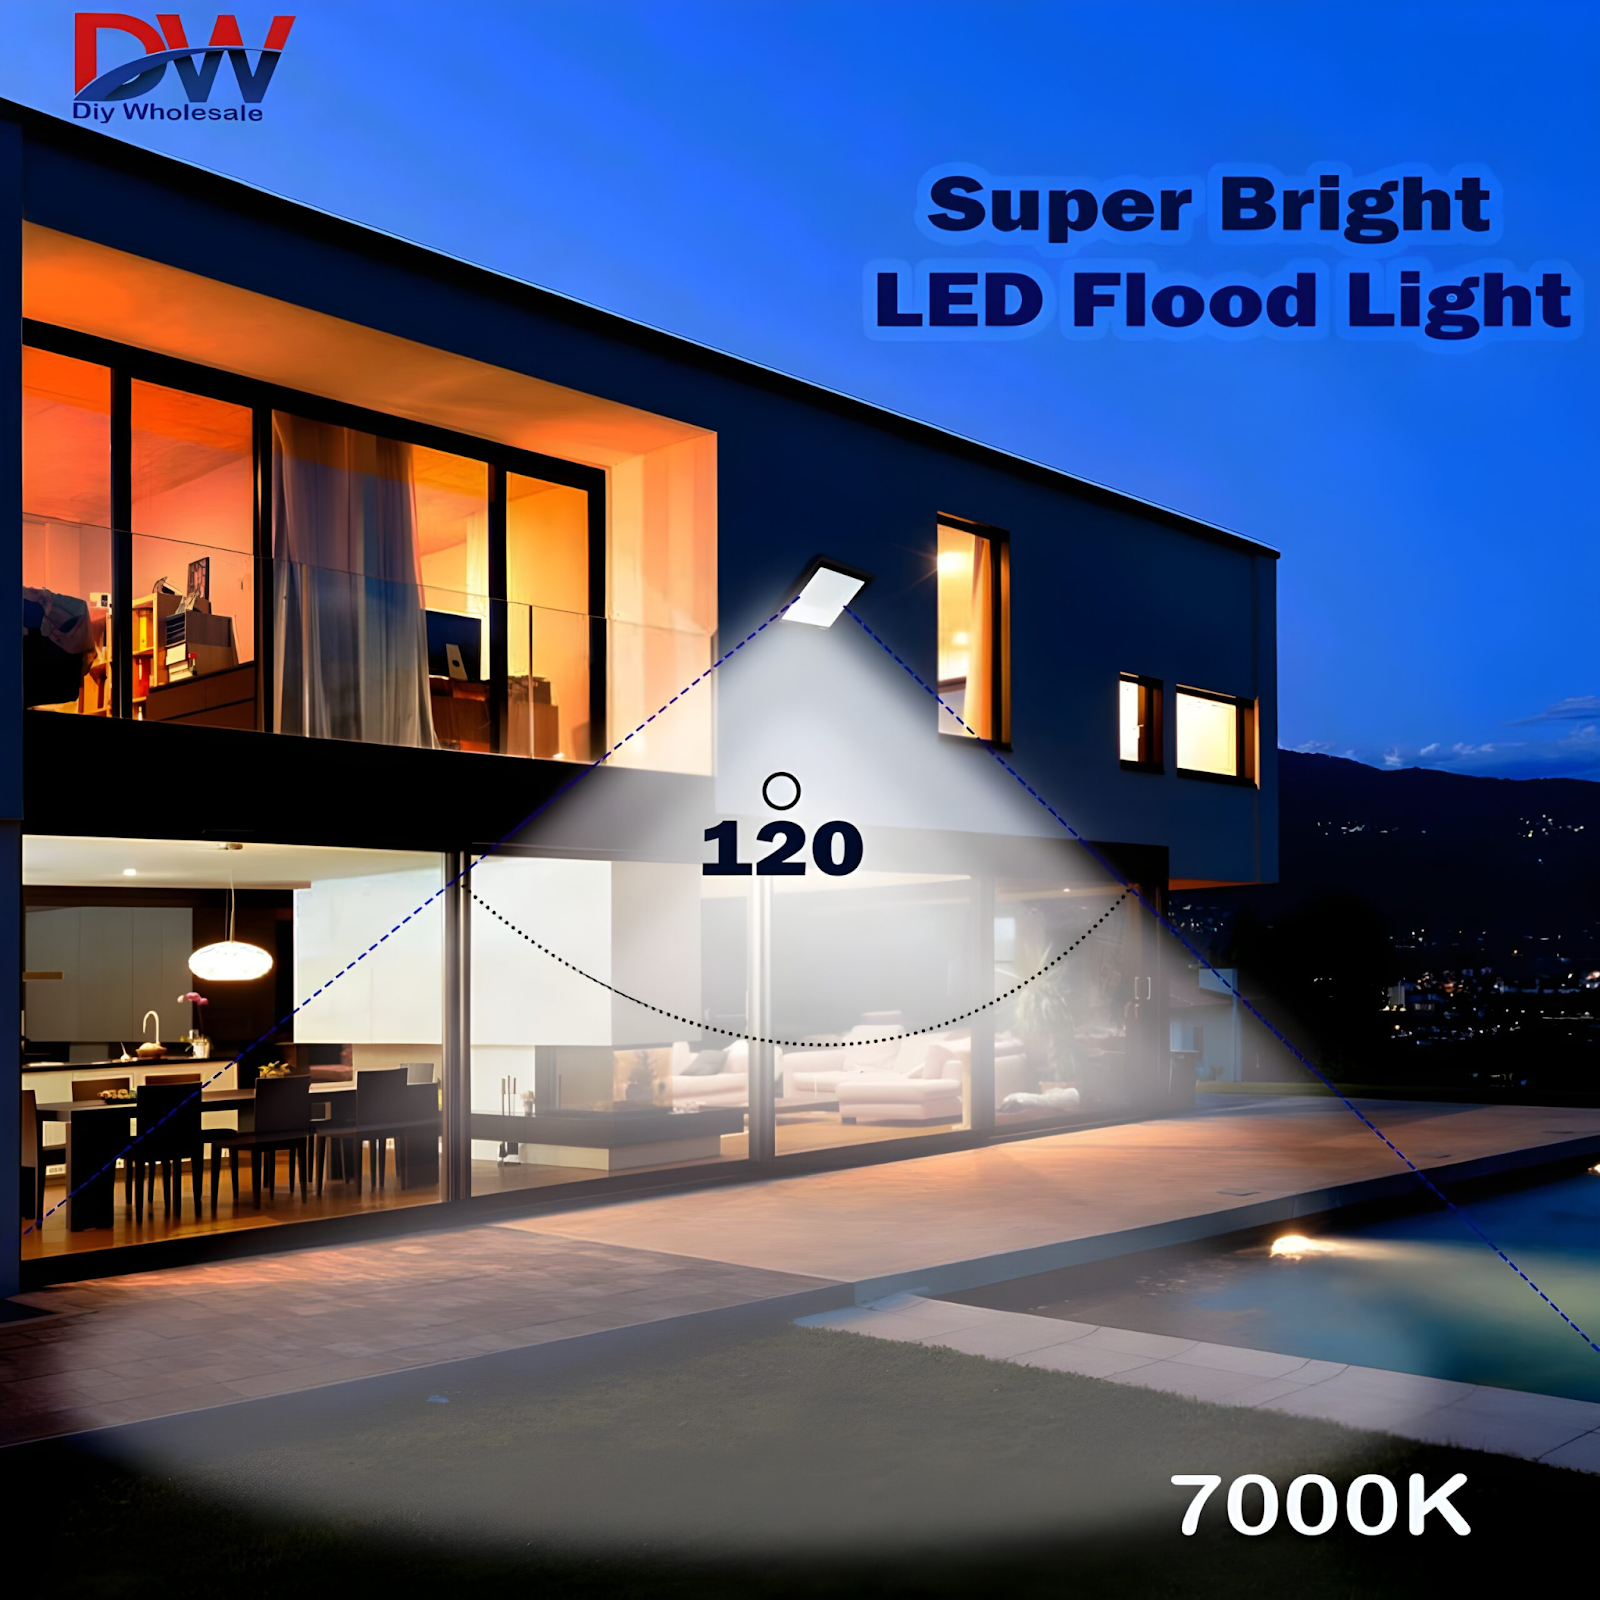 50W LED Floodlight